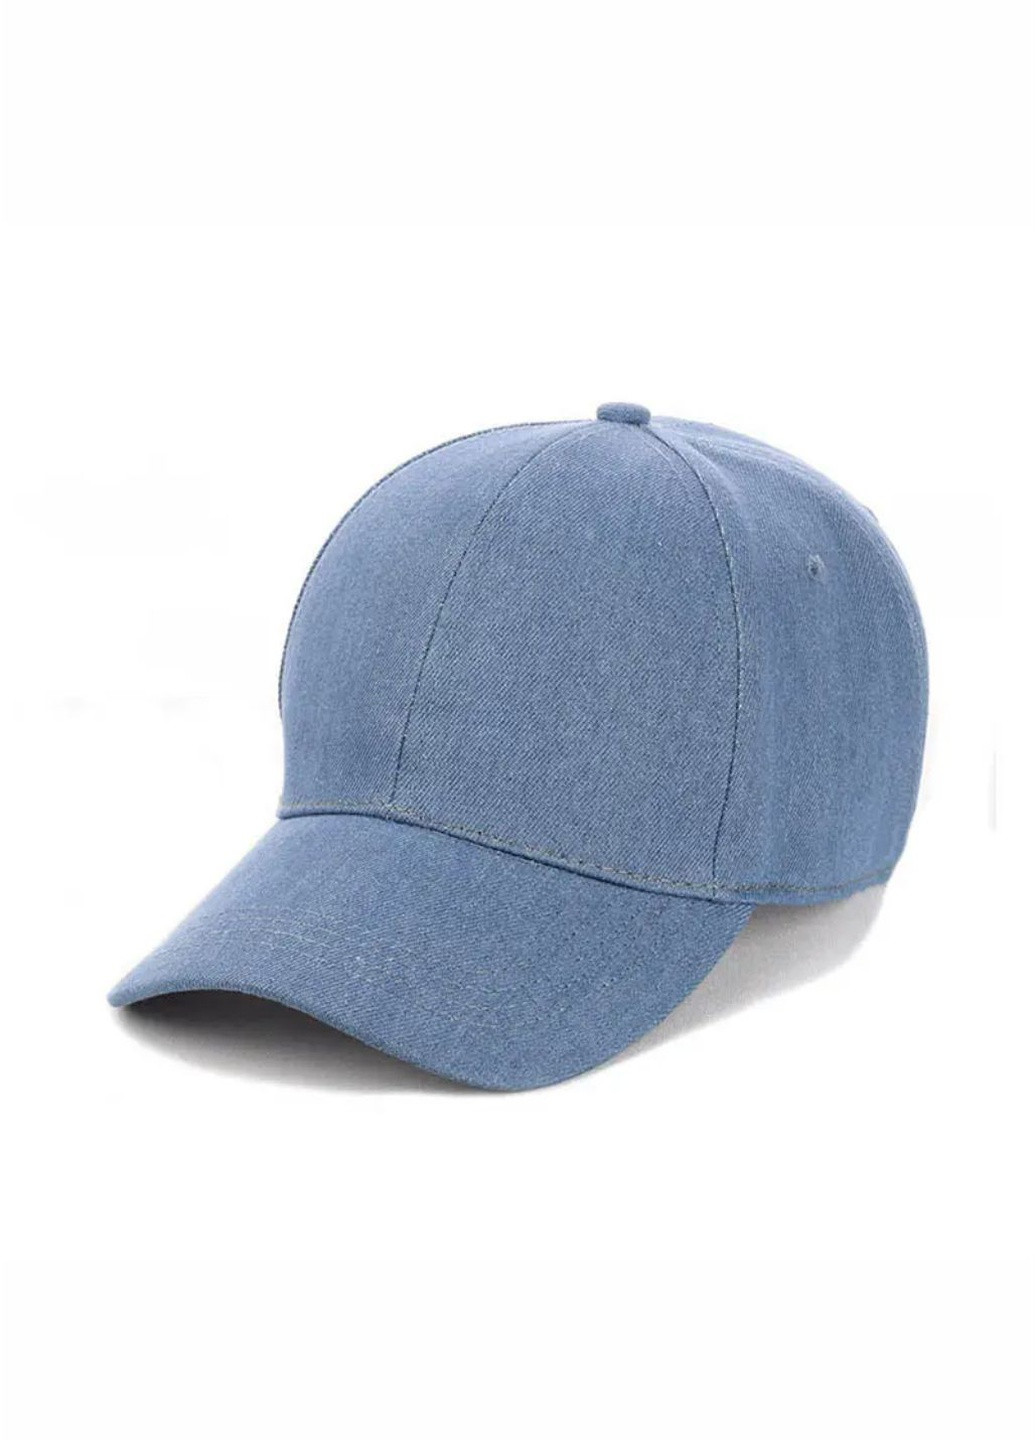 Однотонная кепка бейсболка без логотипа Джинсовый S/M New Fashion бейсболка (257875972)